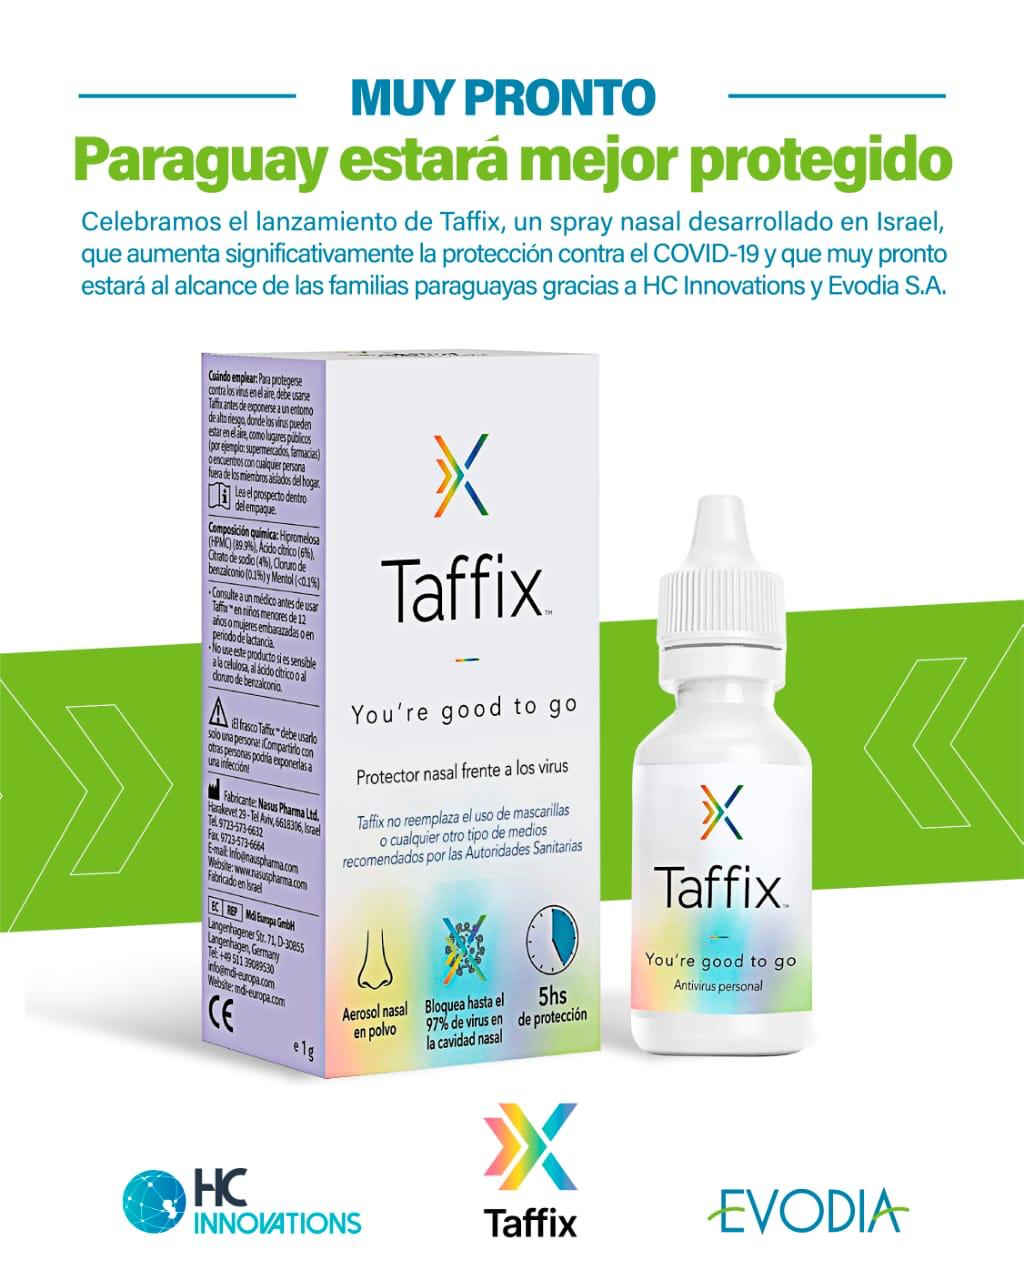 HC Innovations traerá a Paraguay el inhalador nasal Taffix